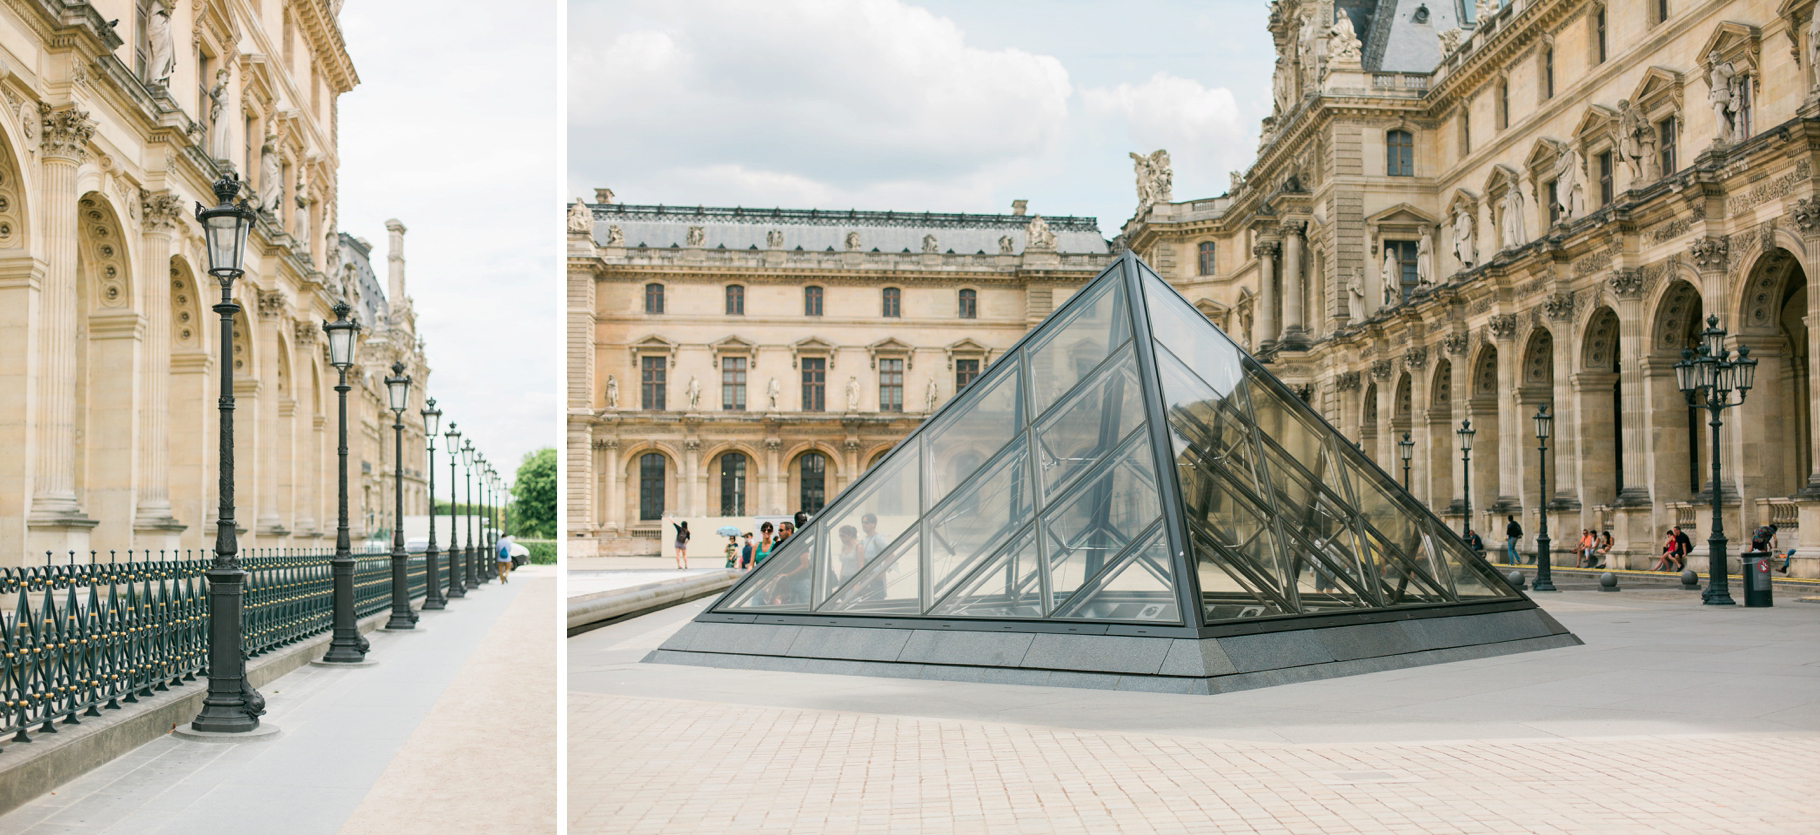 11-Pyramide-de-Louvre-Paris-France-Europe-Travel-Anniversary-Trip-Photography-by-Betty-Elaine